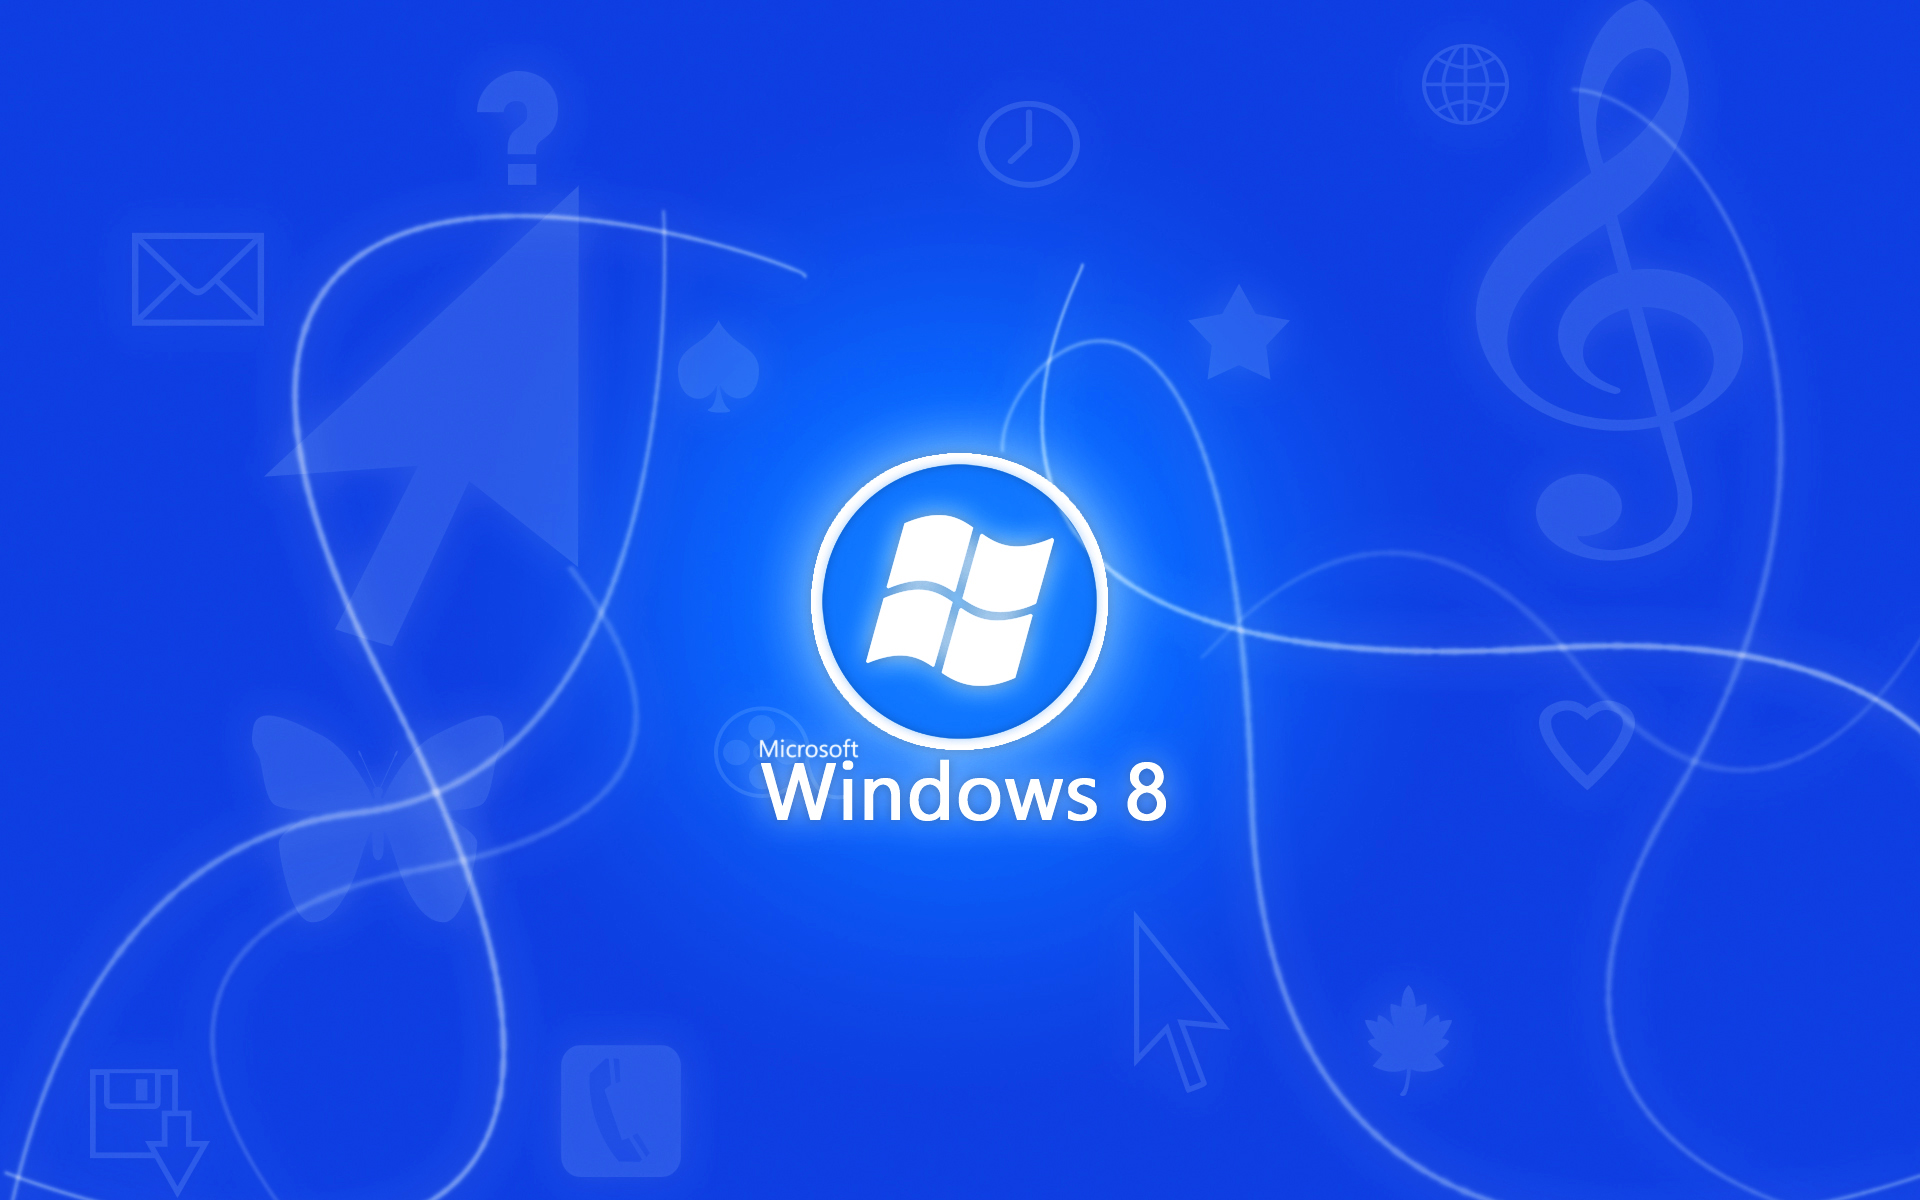 Windows 8 Blue Background Full HD Wallpaper | IFECH Media Group